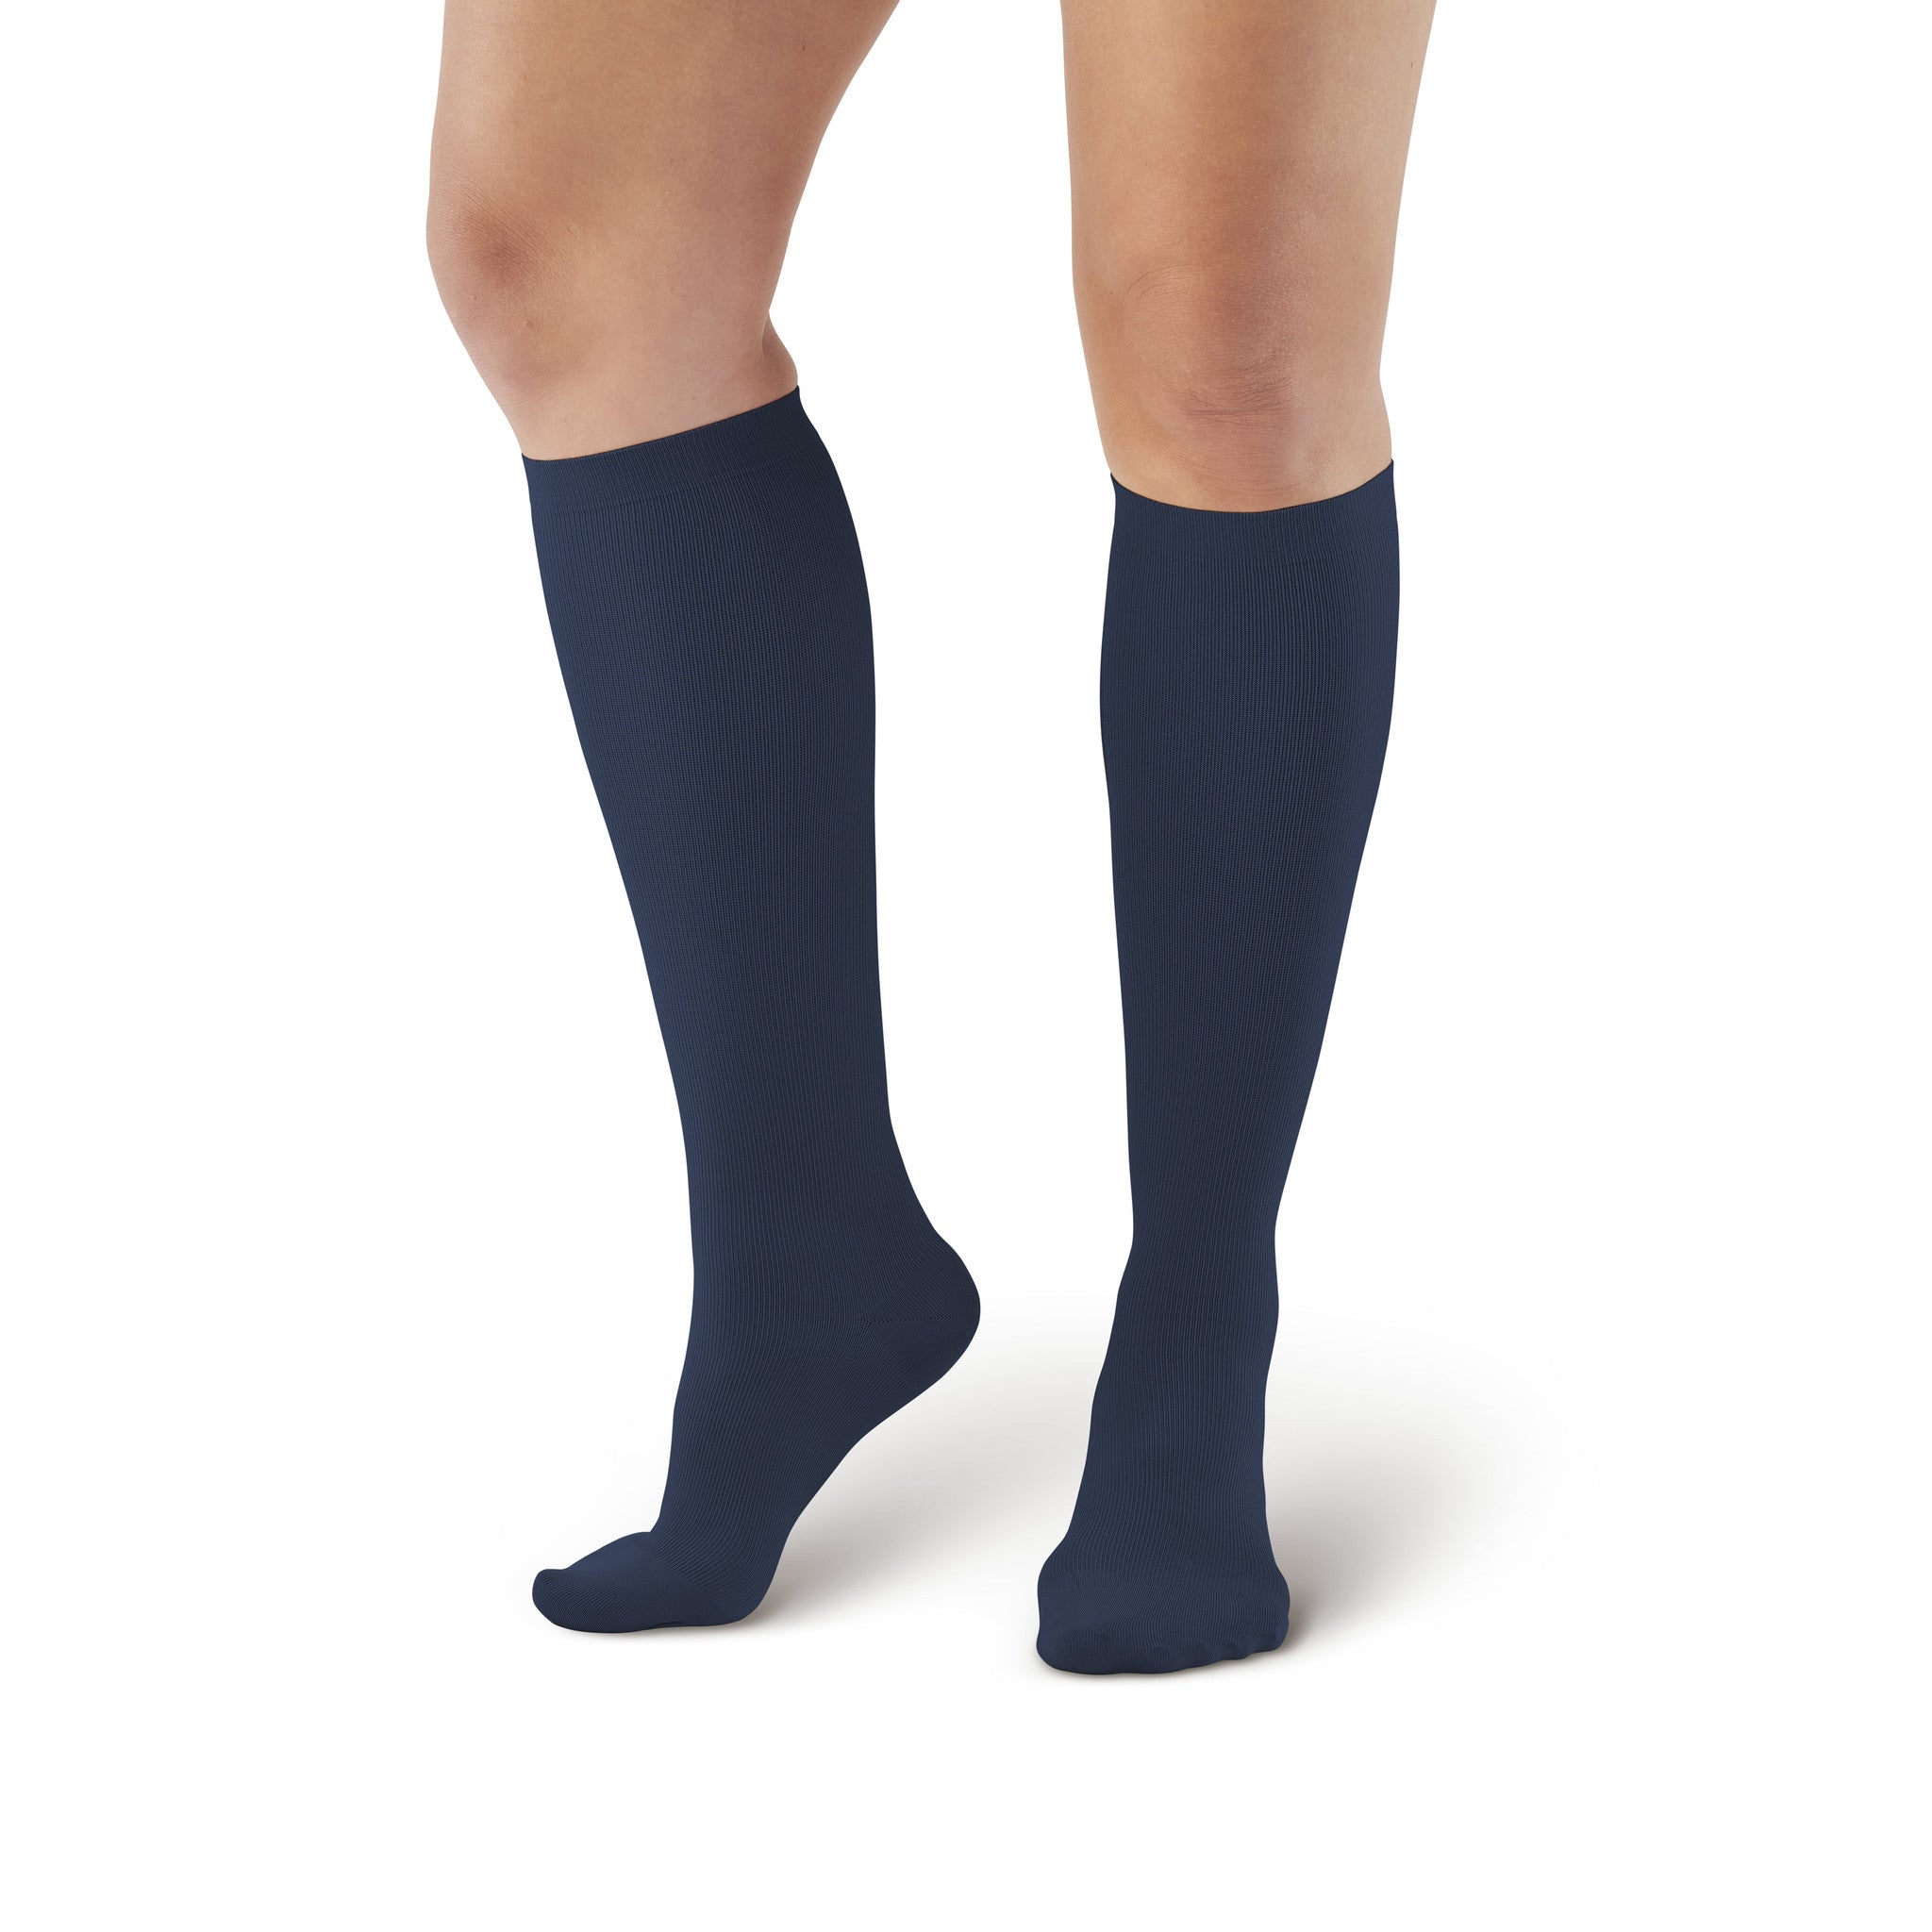 AW Style 136 Women's Compression Socks 20-30 mmHg l Ames Walker